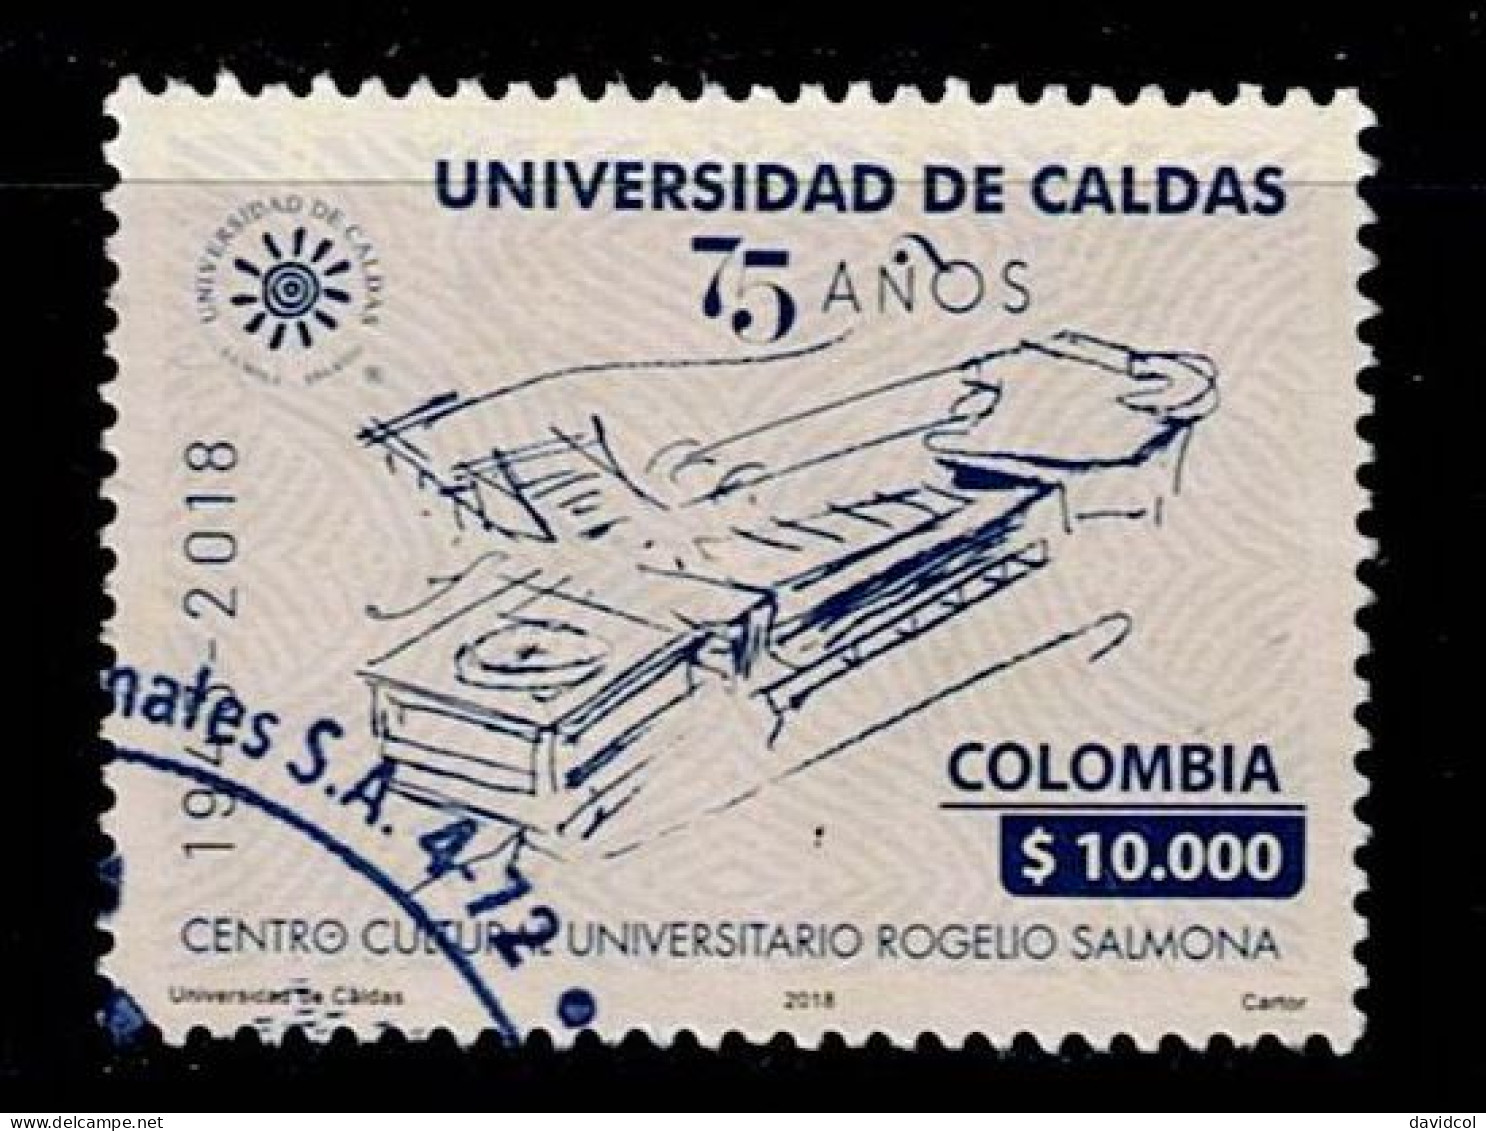 0066K-KOLUMBIEN - 2018 – MNH – 75TH ANNIVERSARY OF CALDAS UNIVERSITY - Colombia